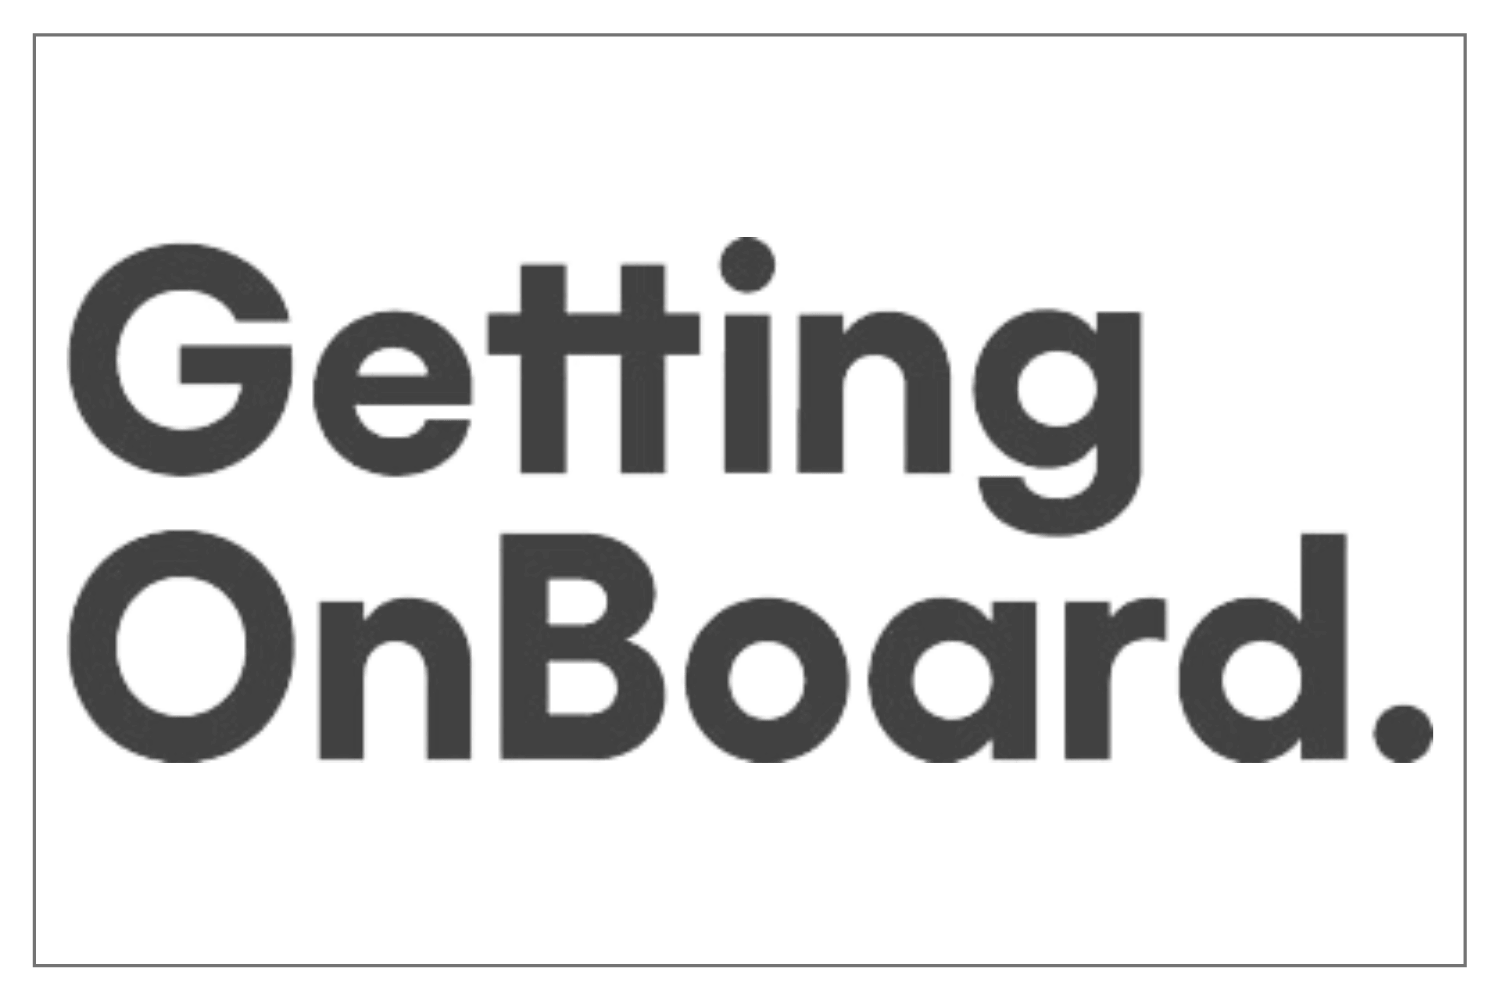 Getting On Board Logo